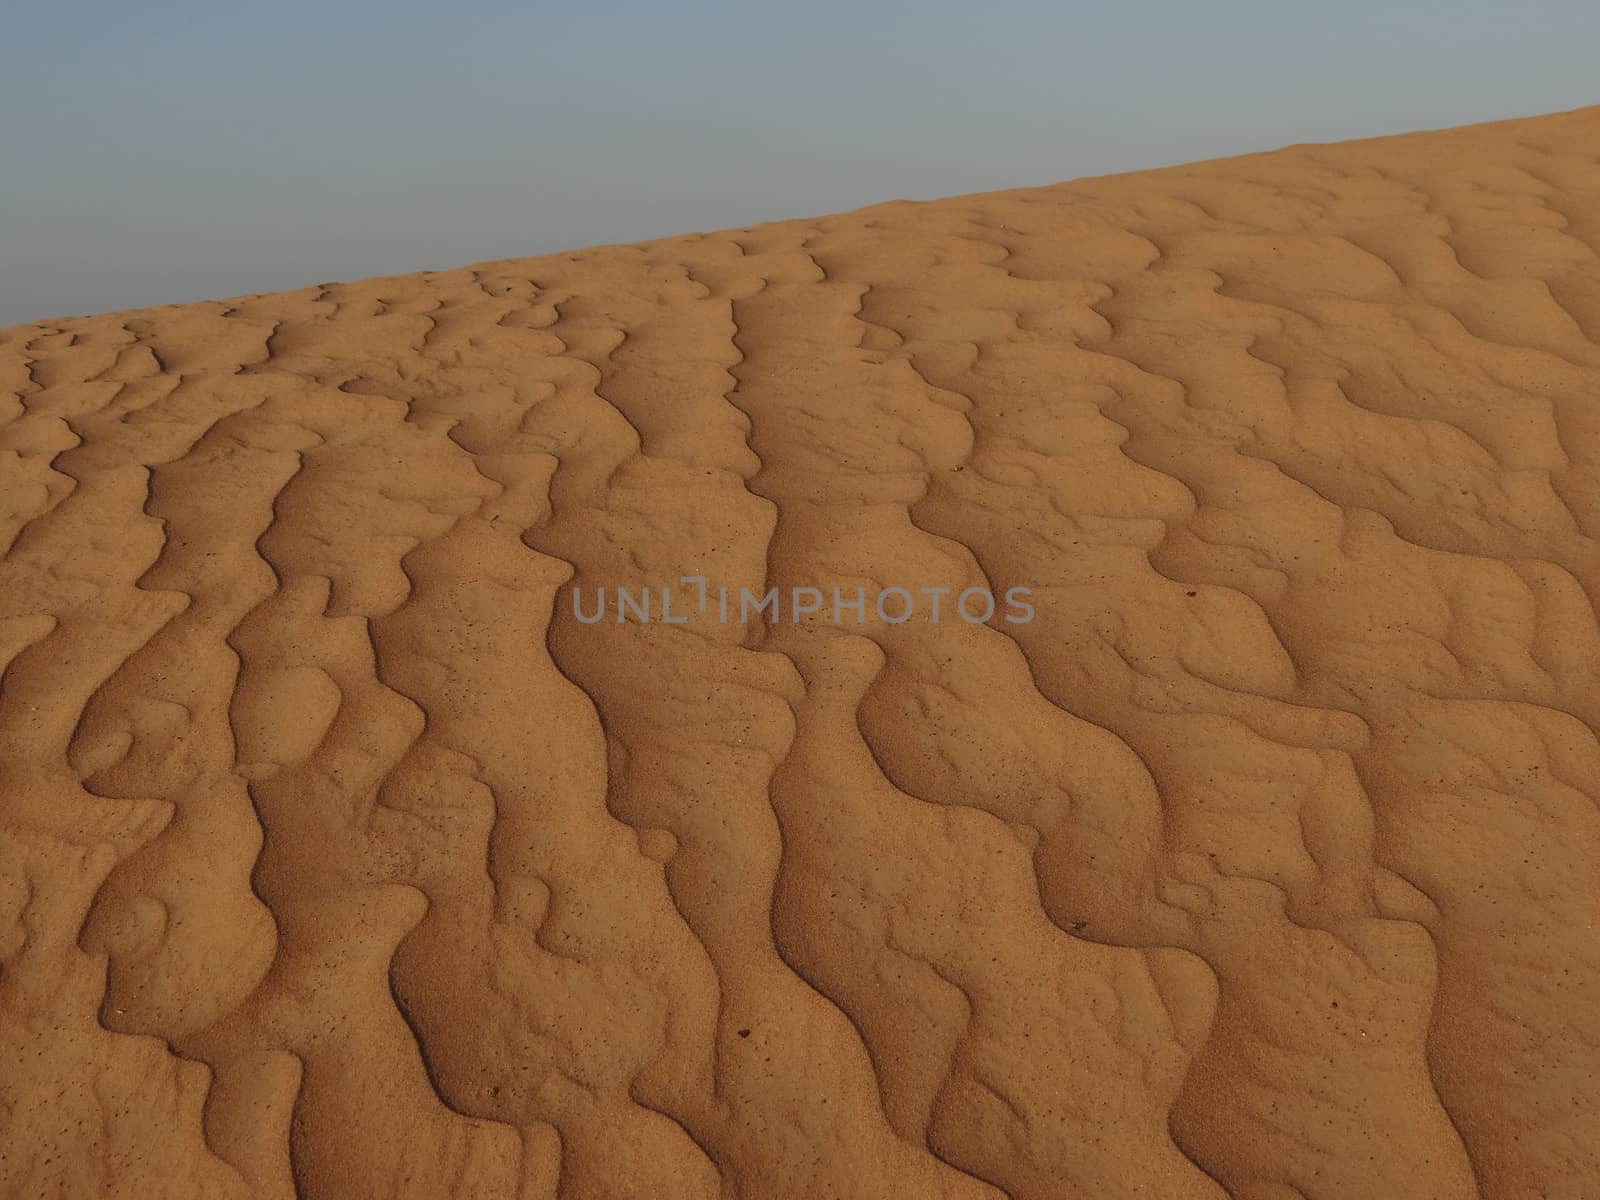 the orange sands of desert by gswagh71